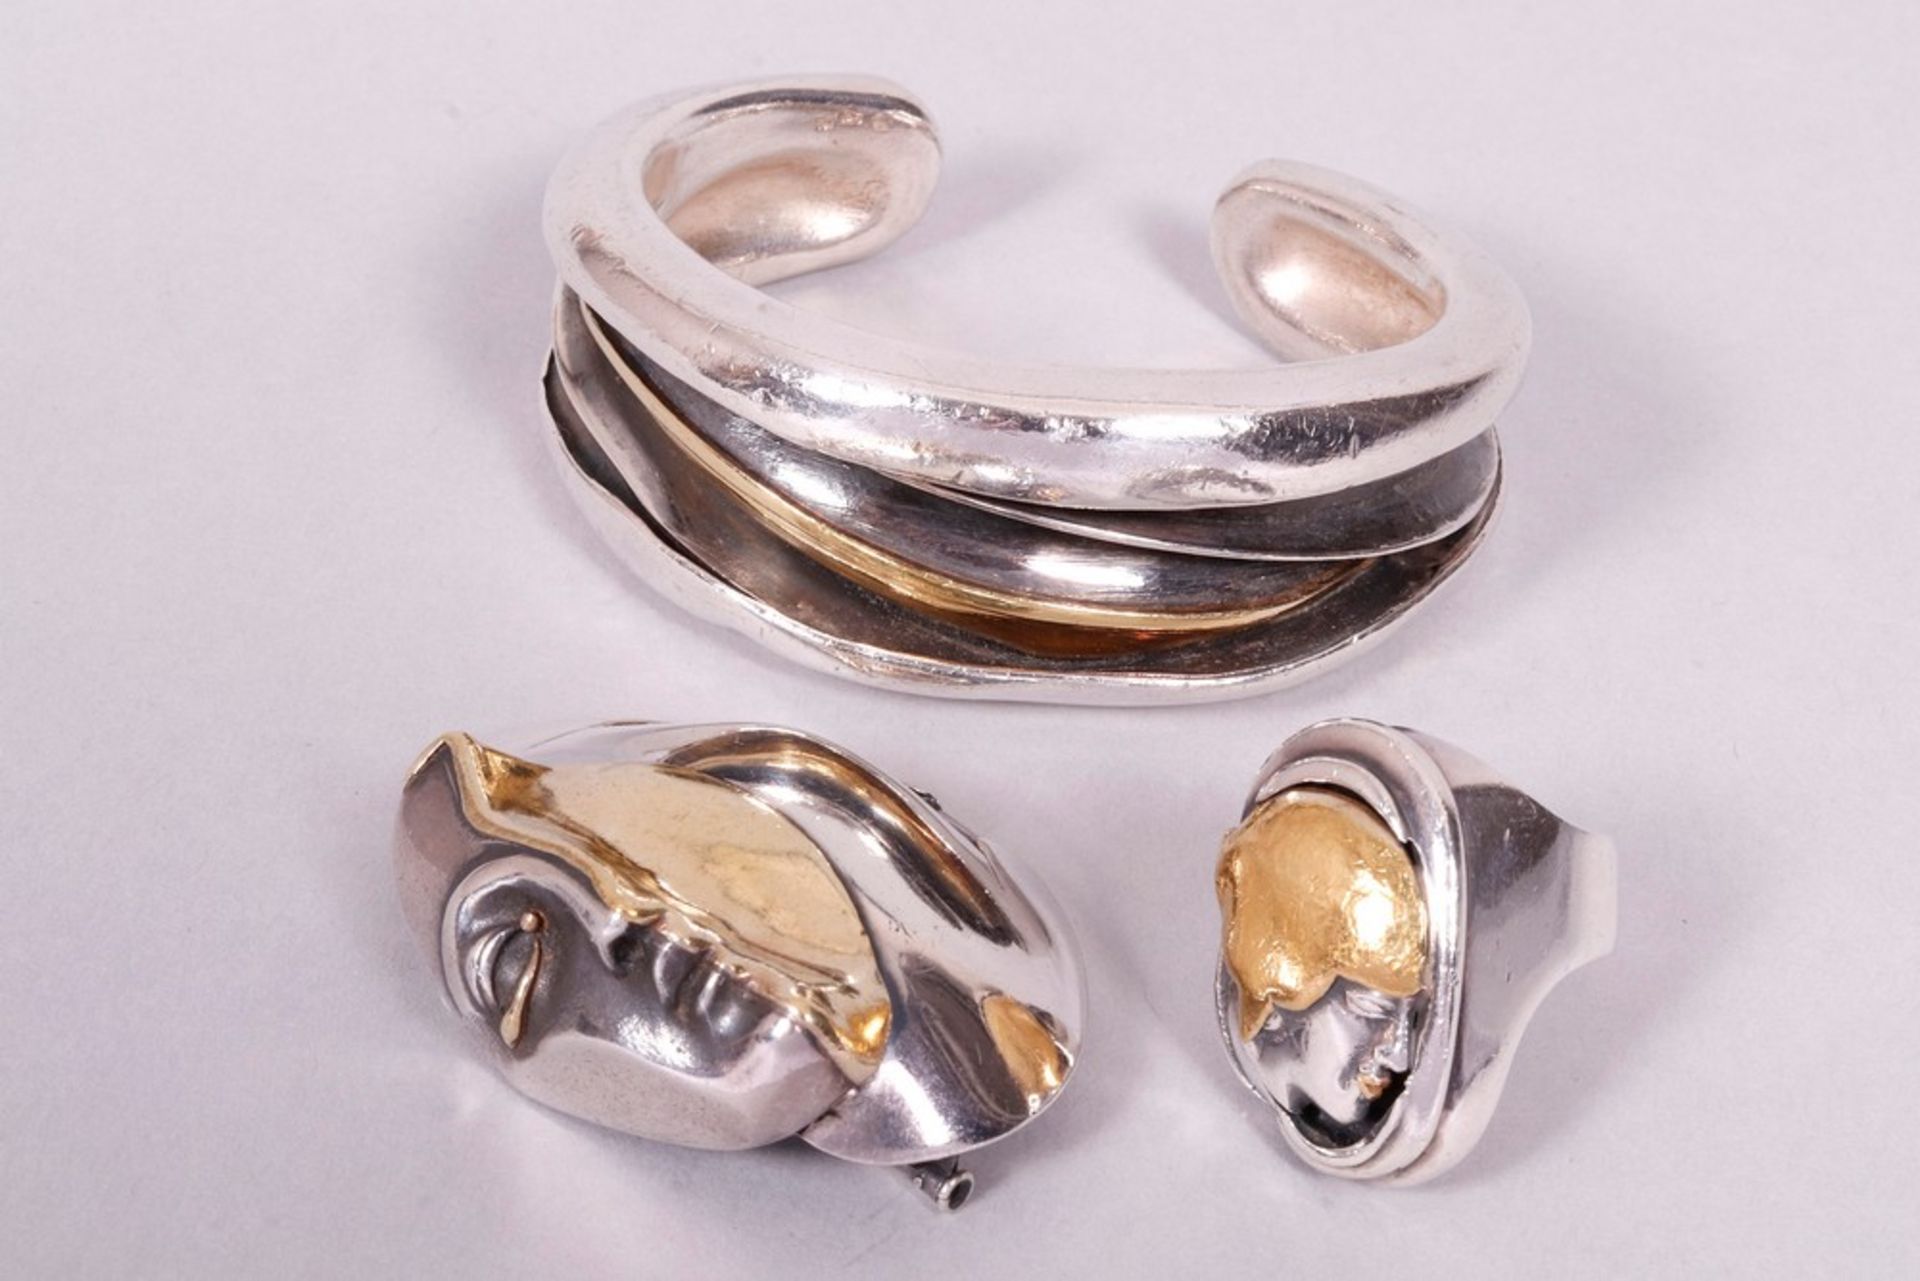 Jewelry set, 925 silver/750 GG, Juwelier Sack, Lübeck, 3 pcs. - Image 2 of 6